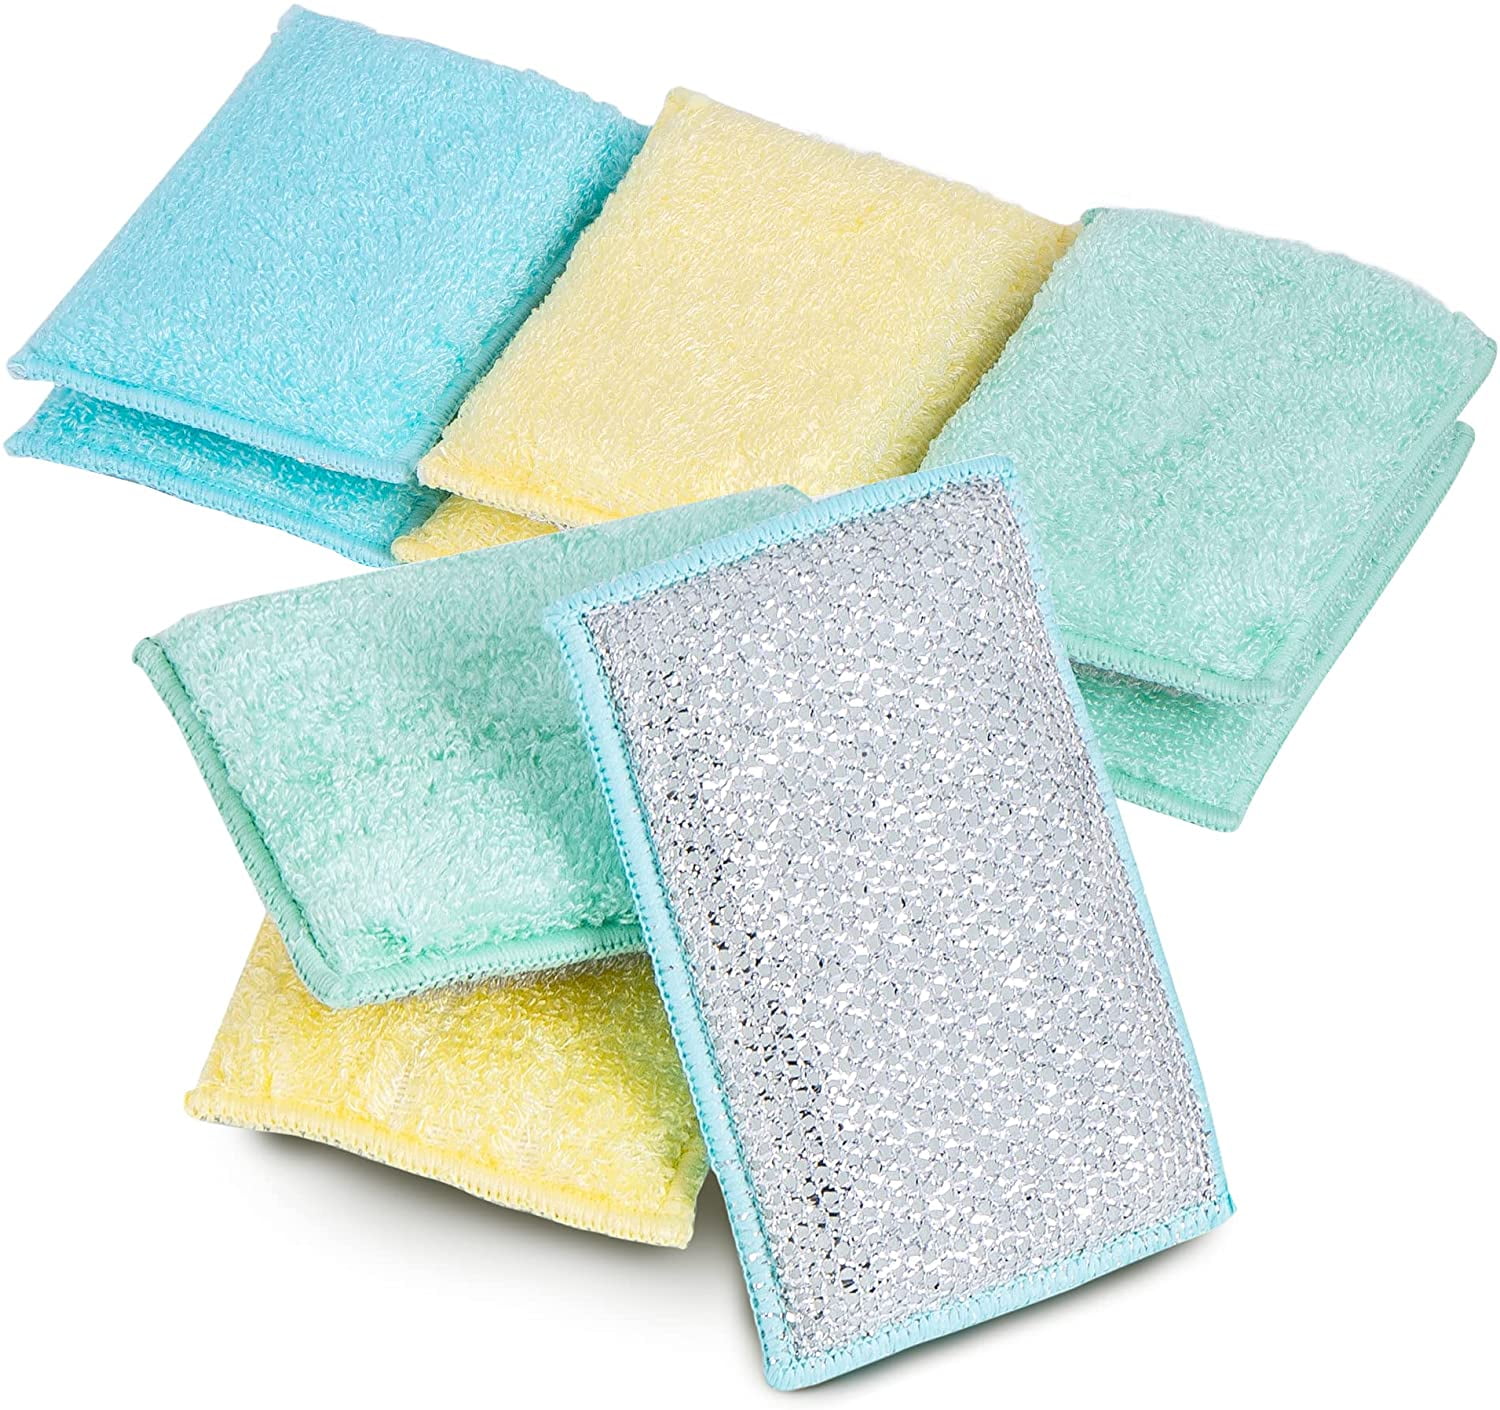  Scrub Daddy Damp Duster Towel - Durable Sponge-Like